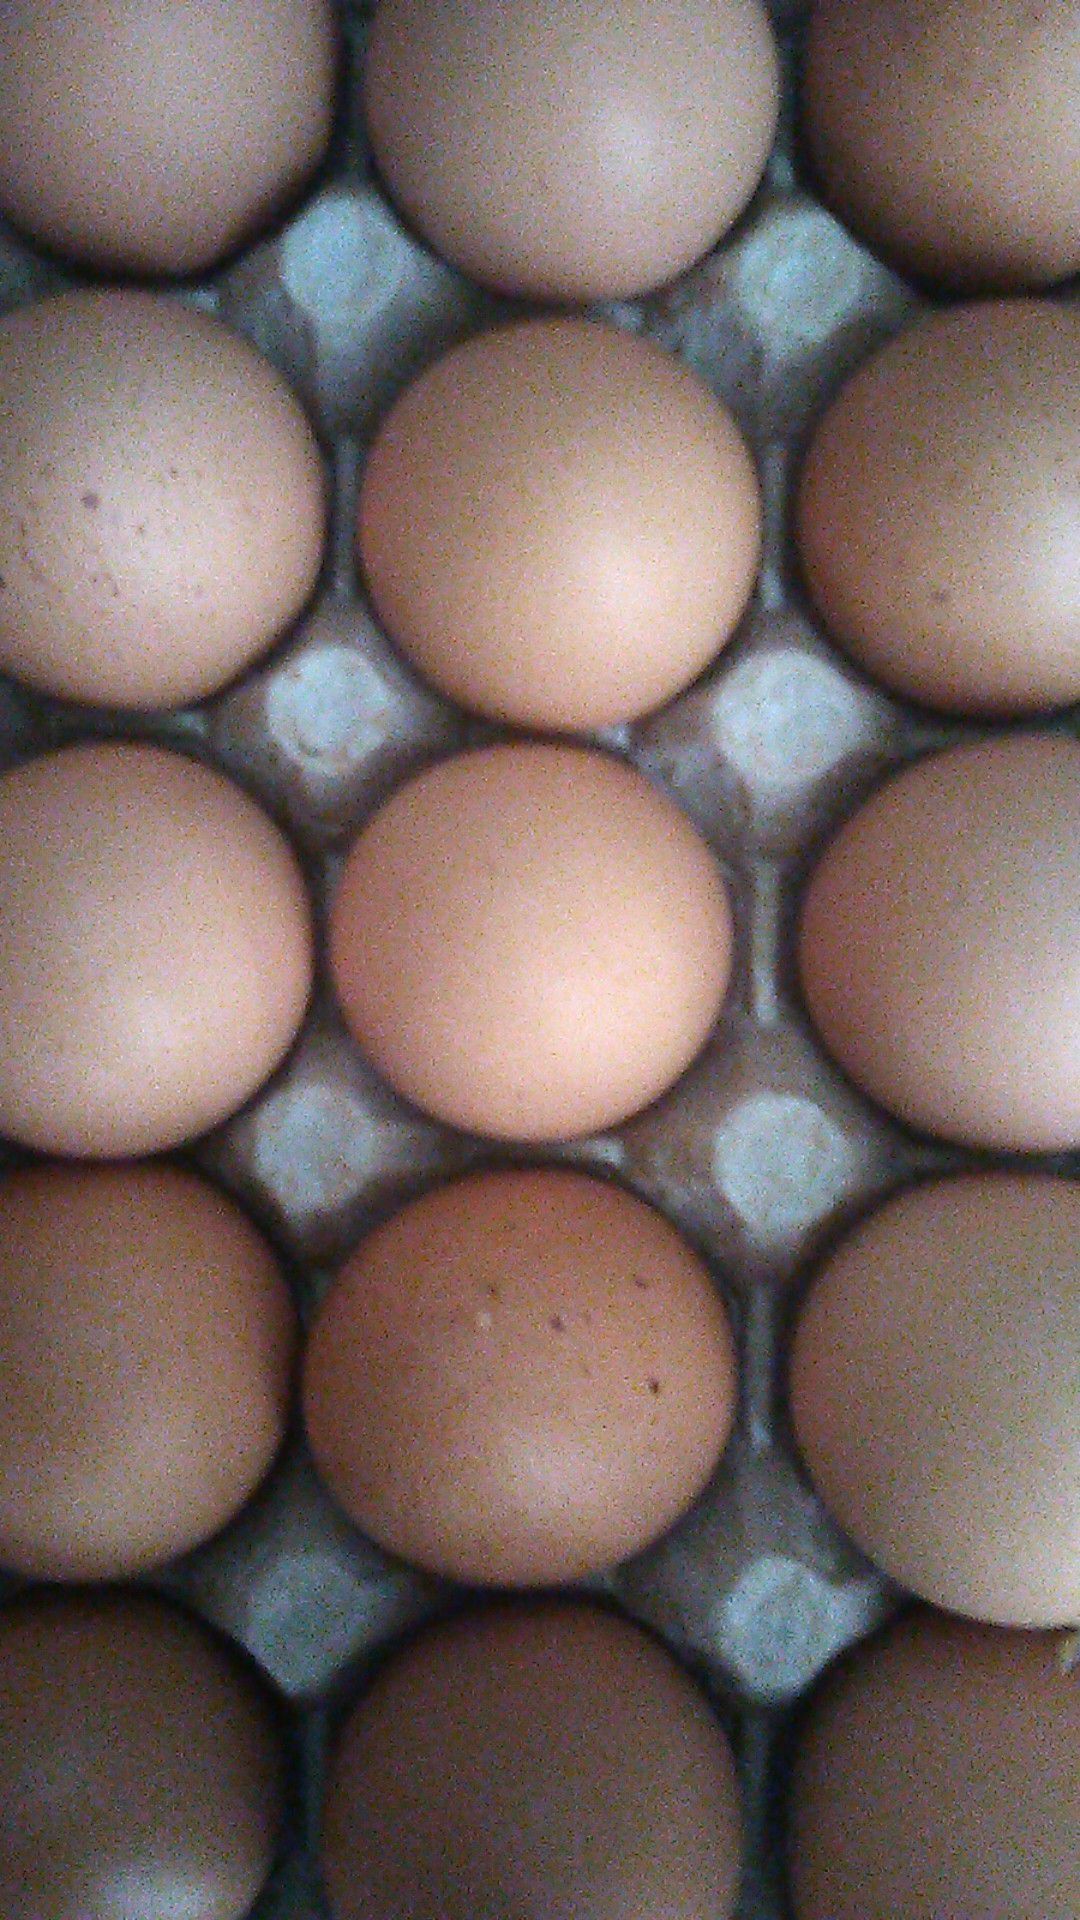 Large Organic eggs